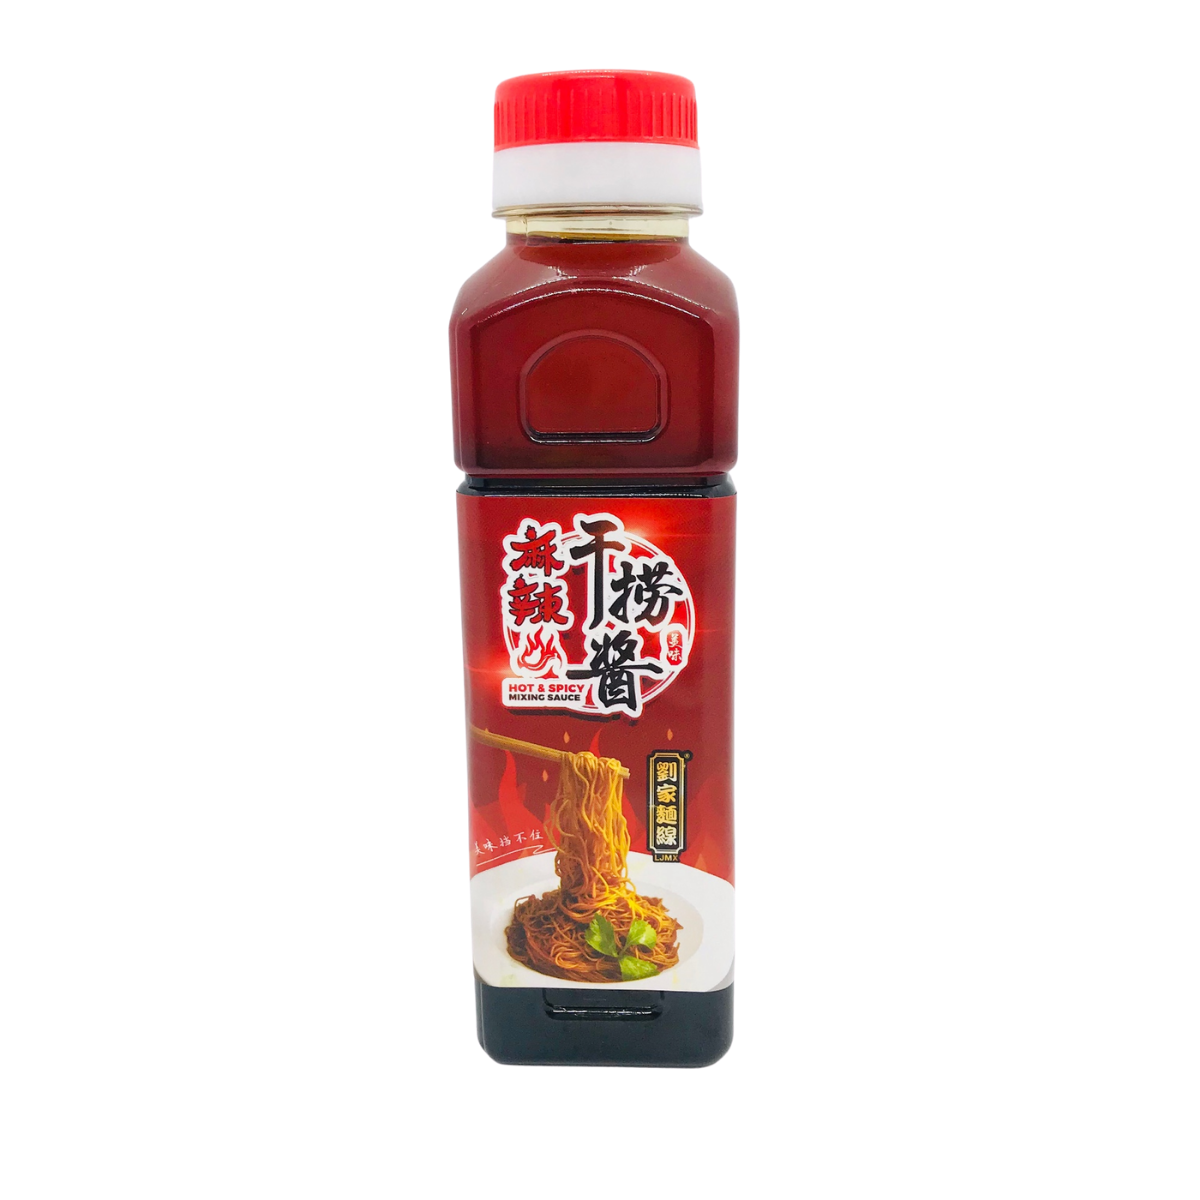 LJMX Sarawak Kolo Mee Hot & Spicy Mixing Sauce 310g